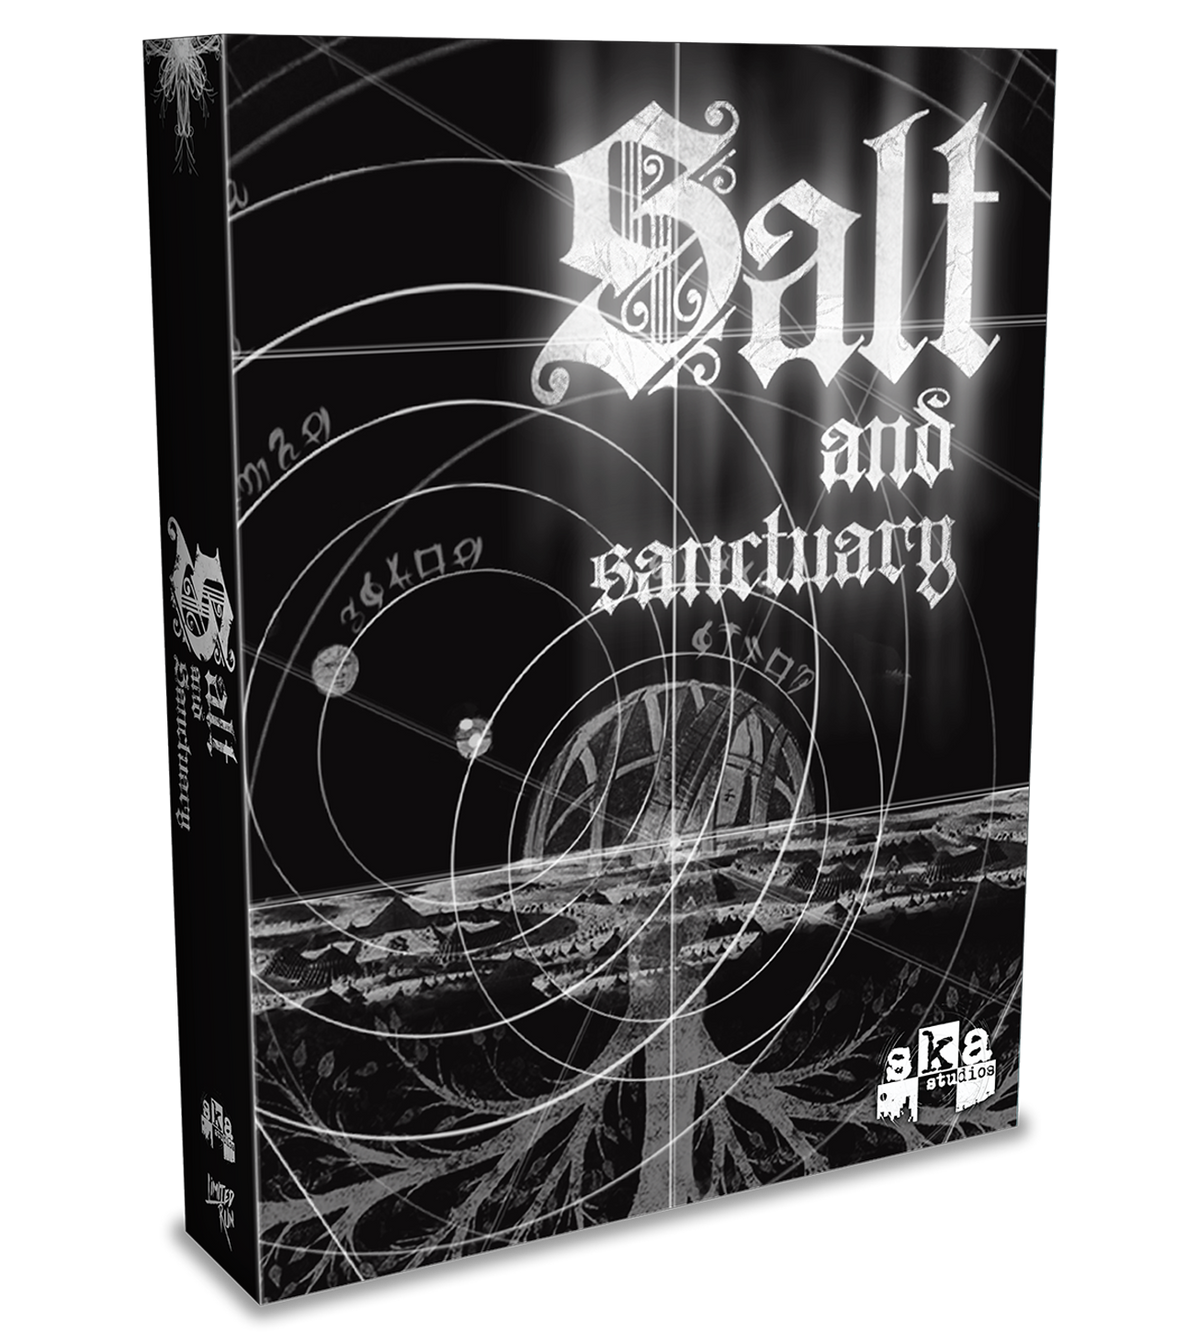 Limited Run #167: Salt & Sanctuary Collector's Edition (Vita)